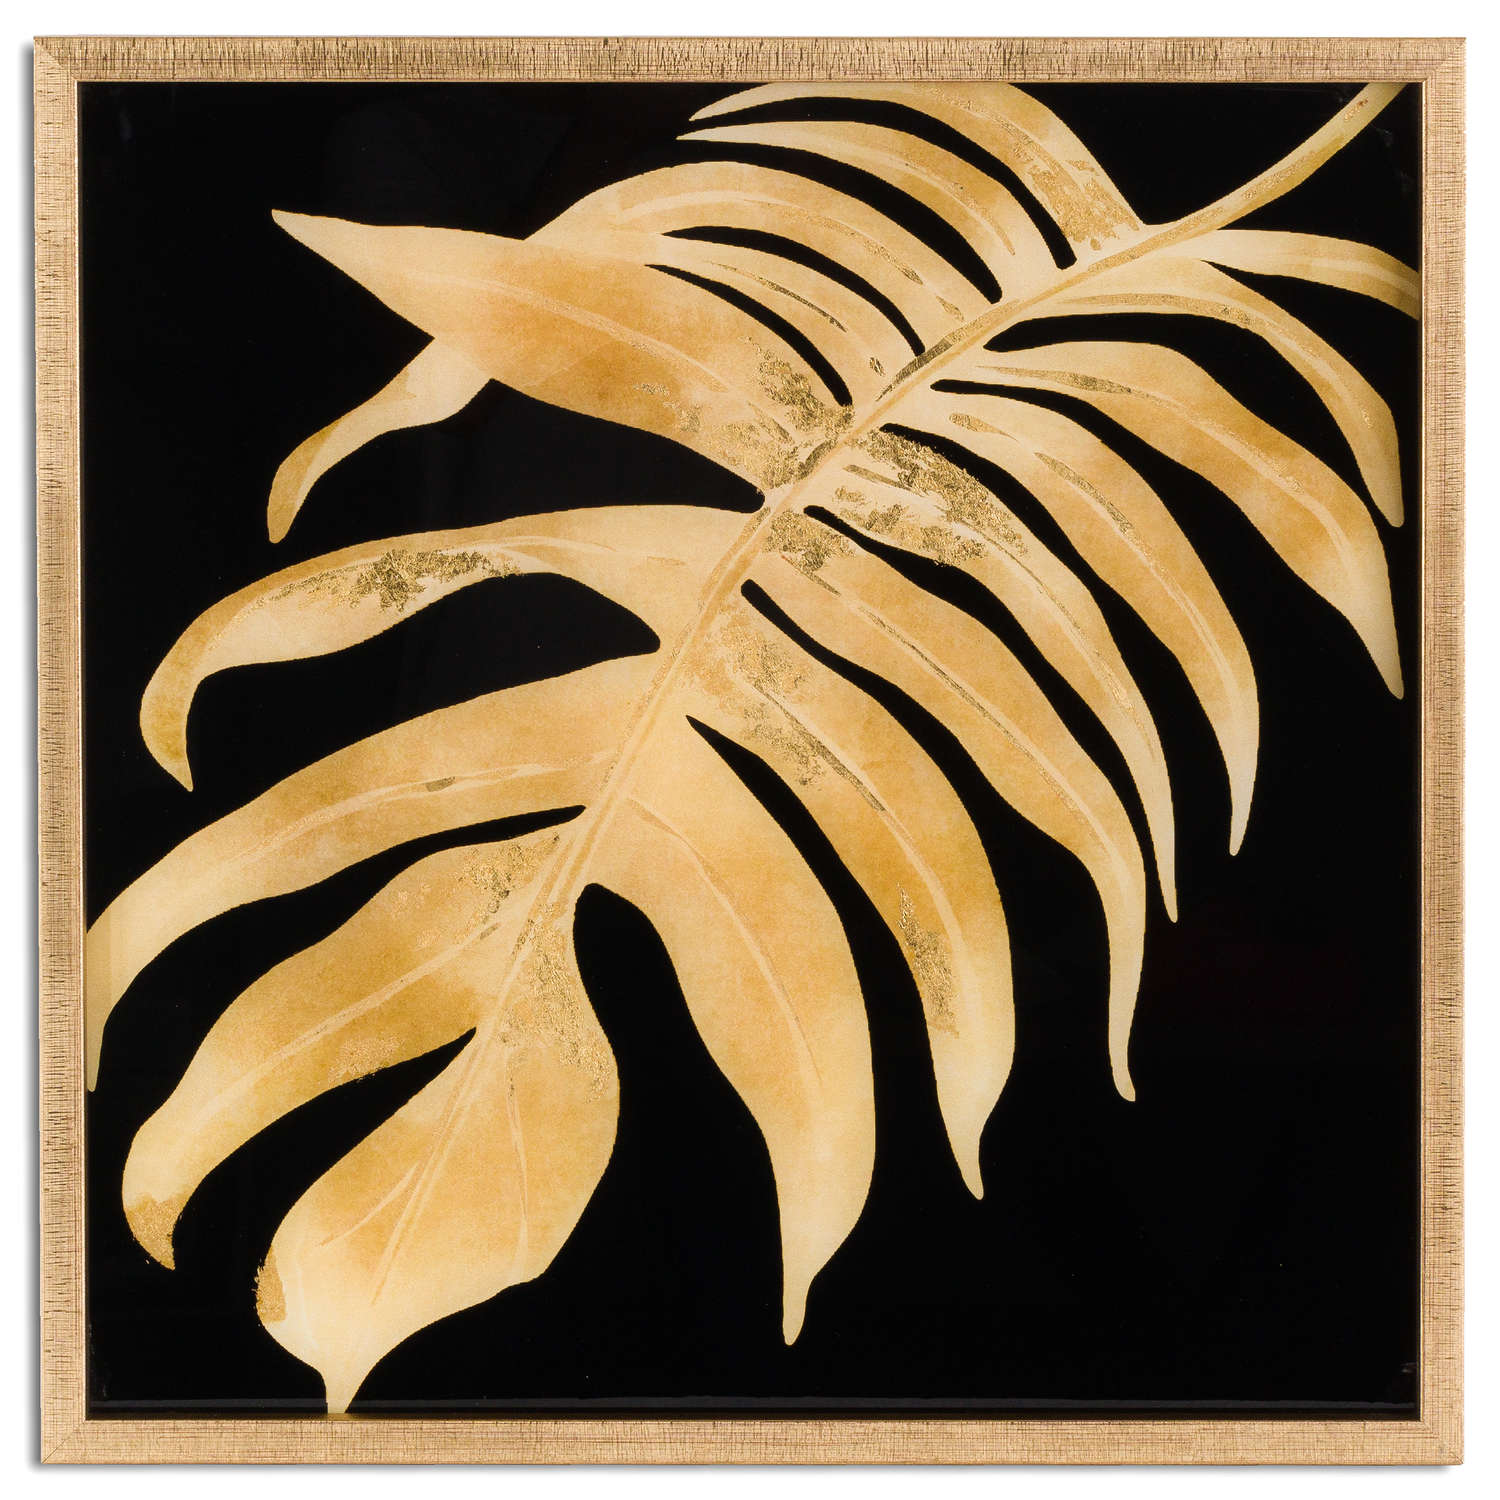 Metallic Leaf Glass Image In Gold Frame - Image 1